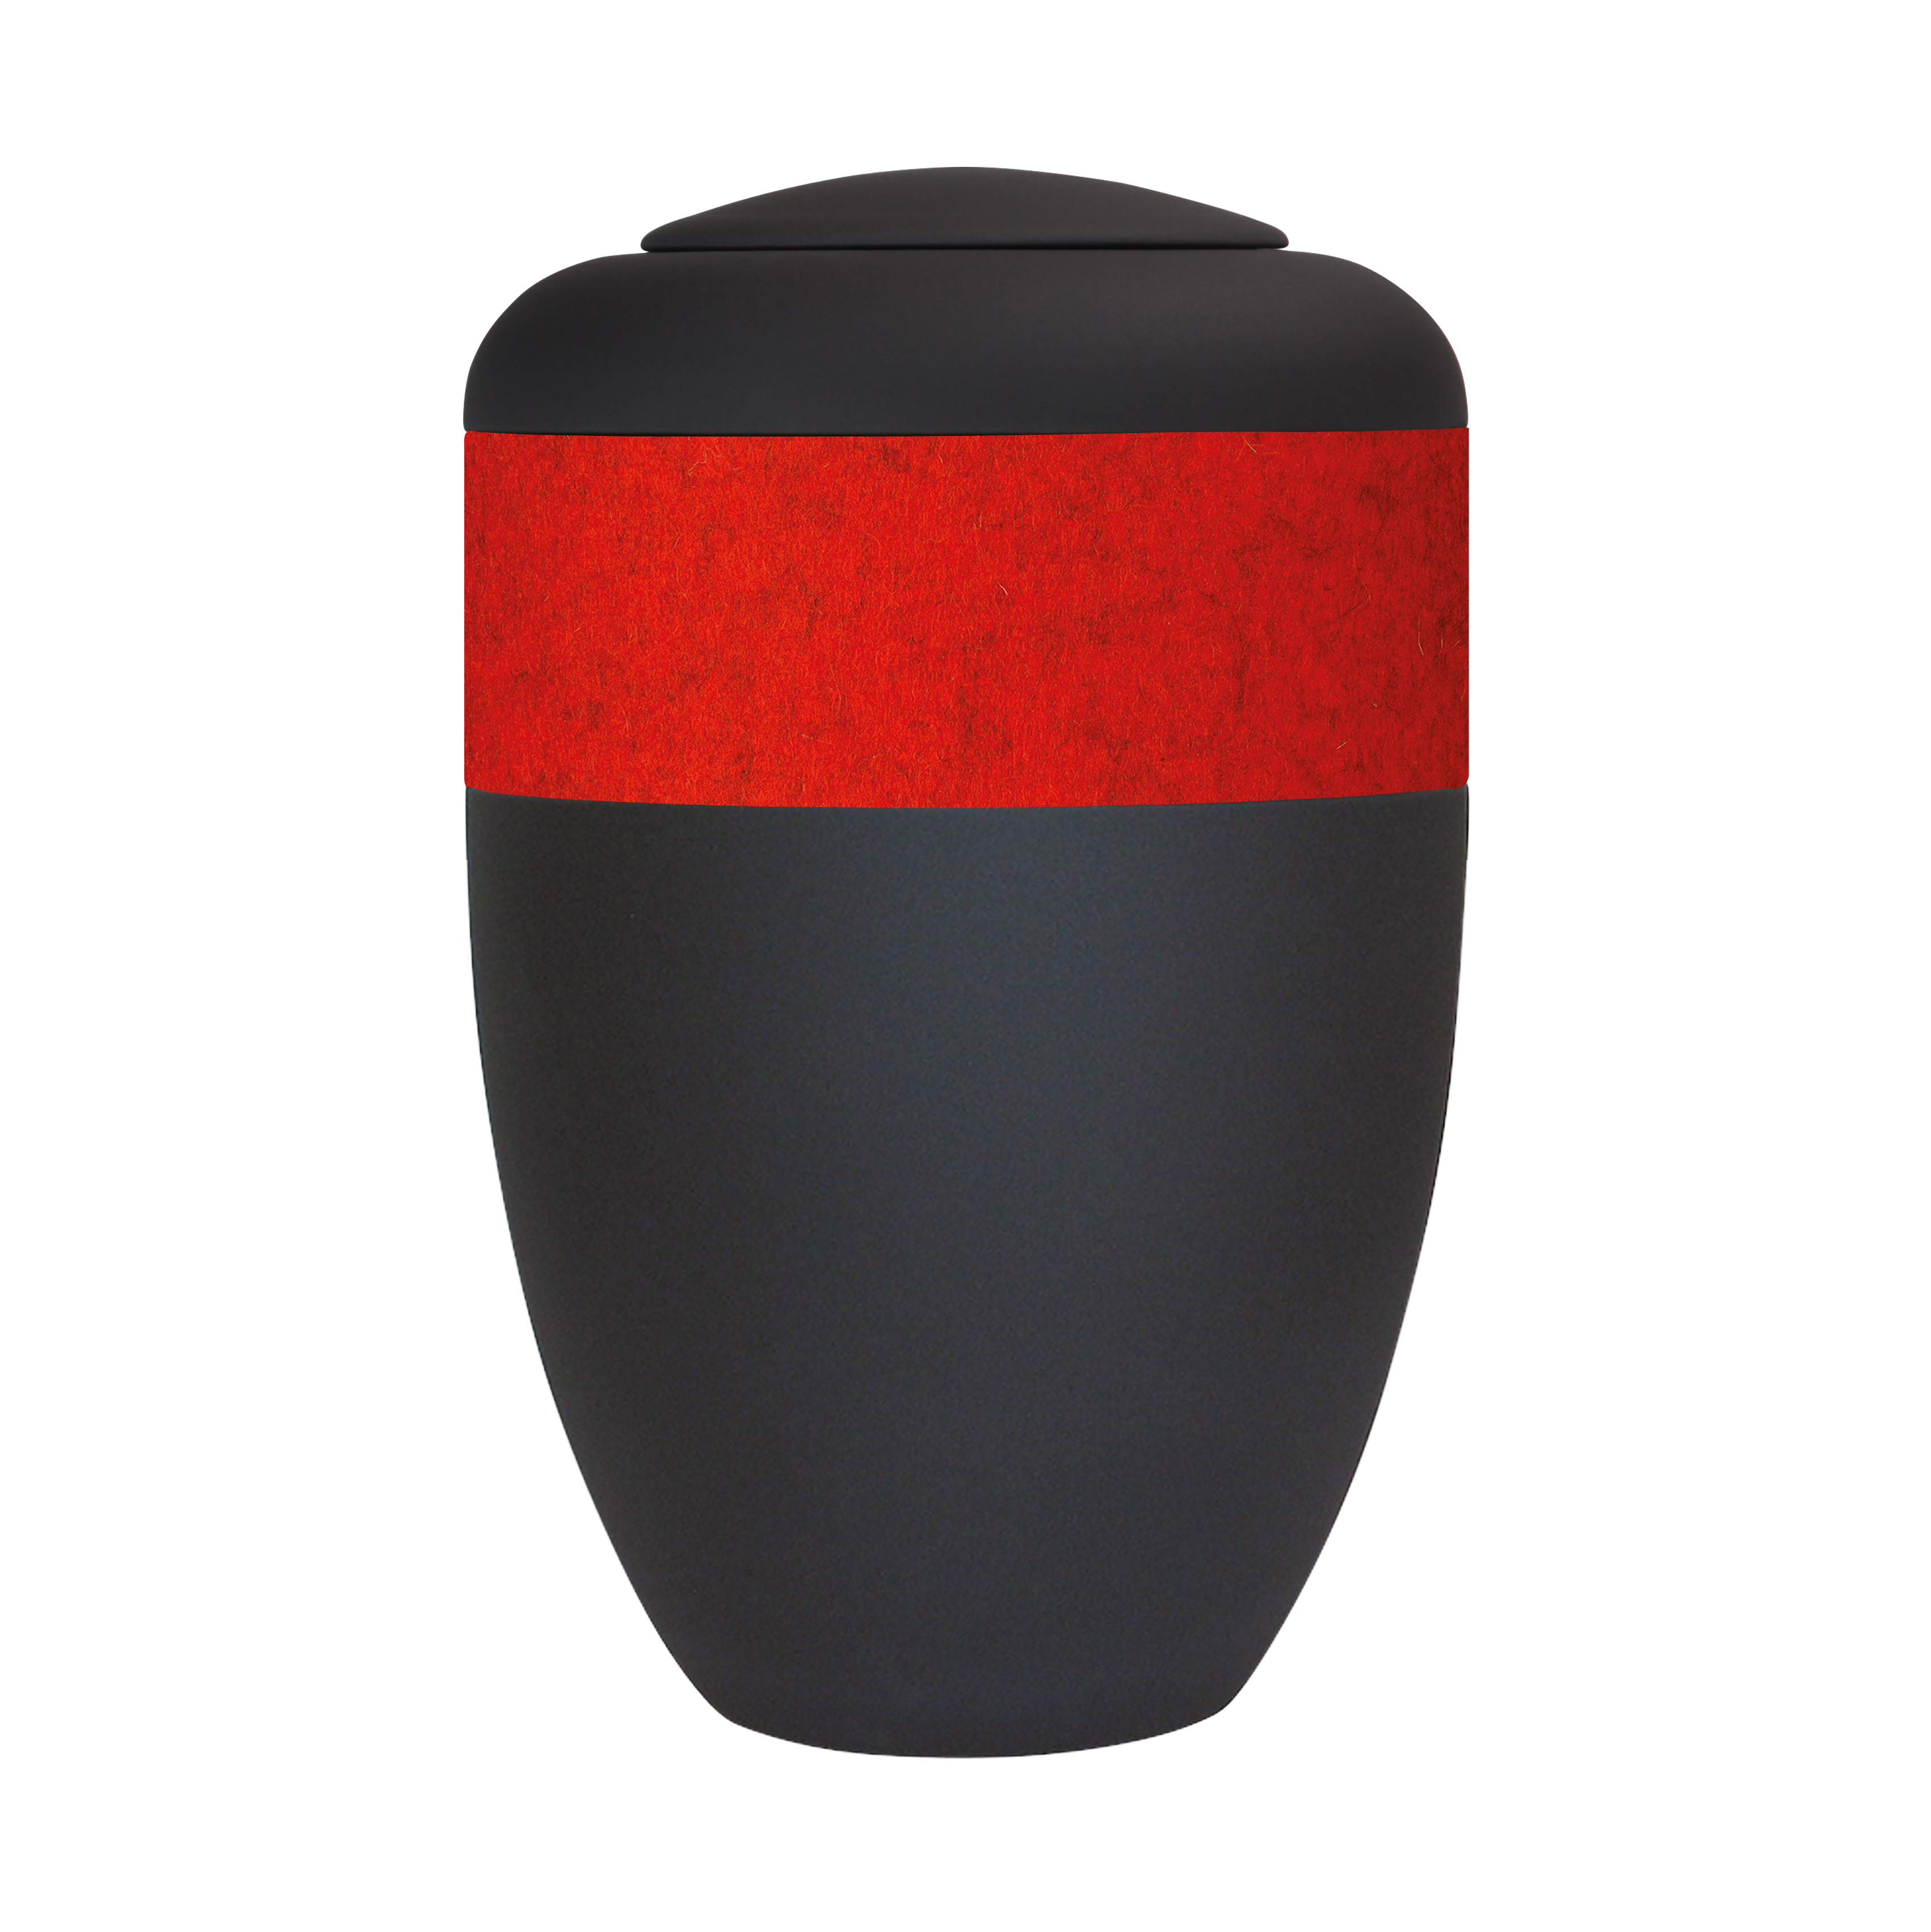 schwarze Ring-Urne mit rotem Filzring